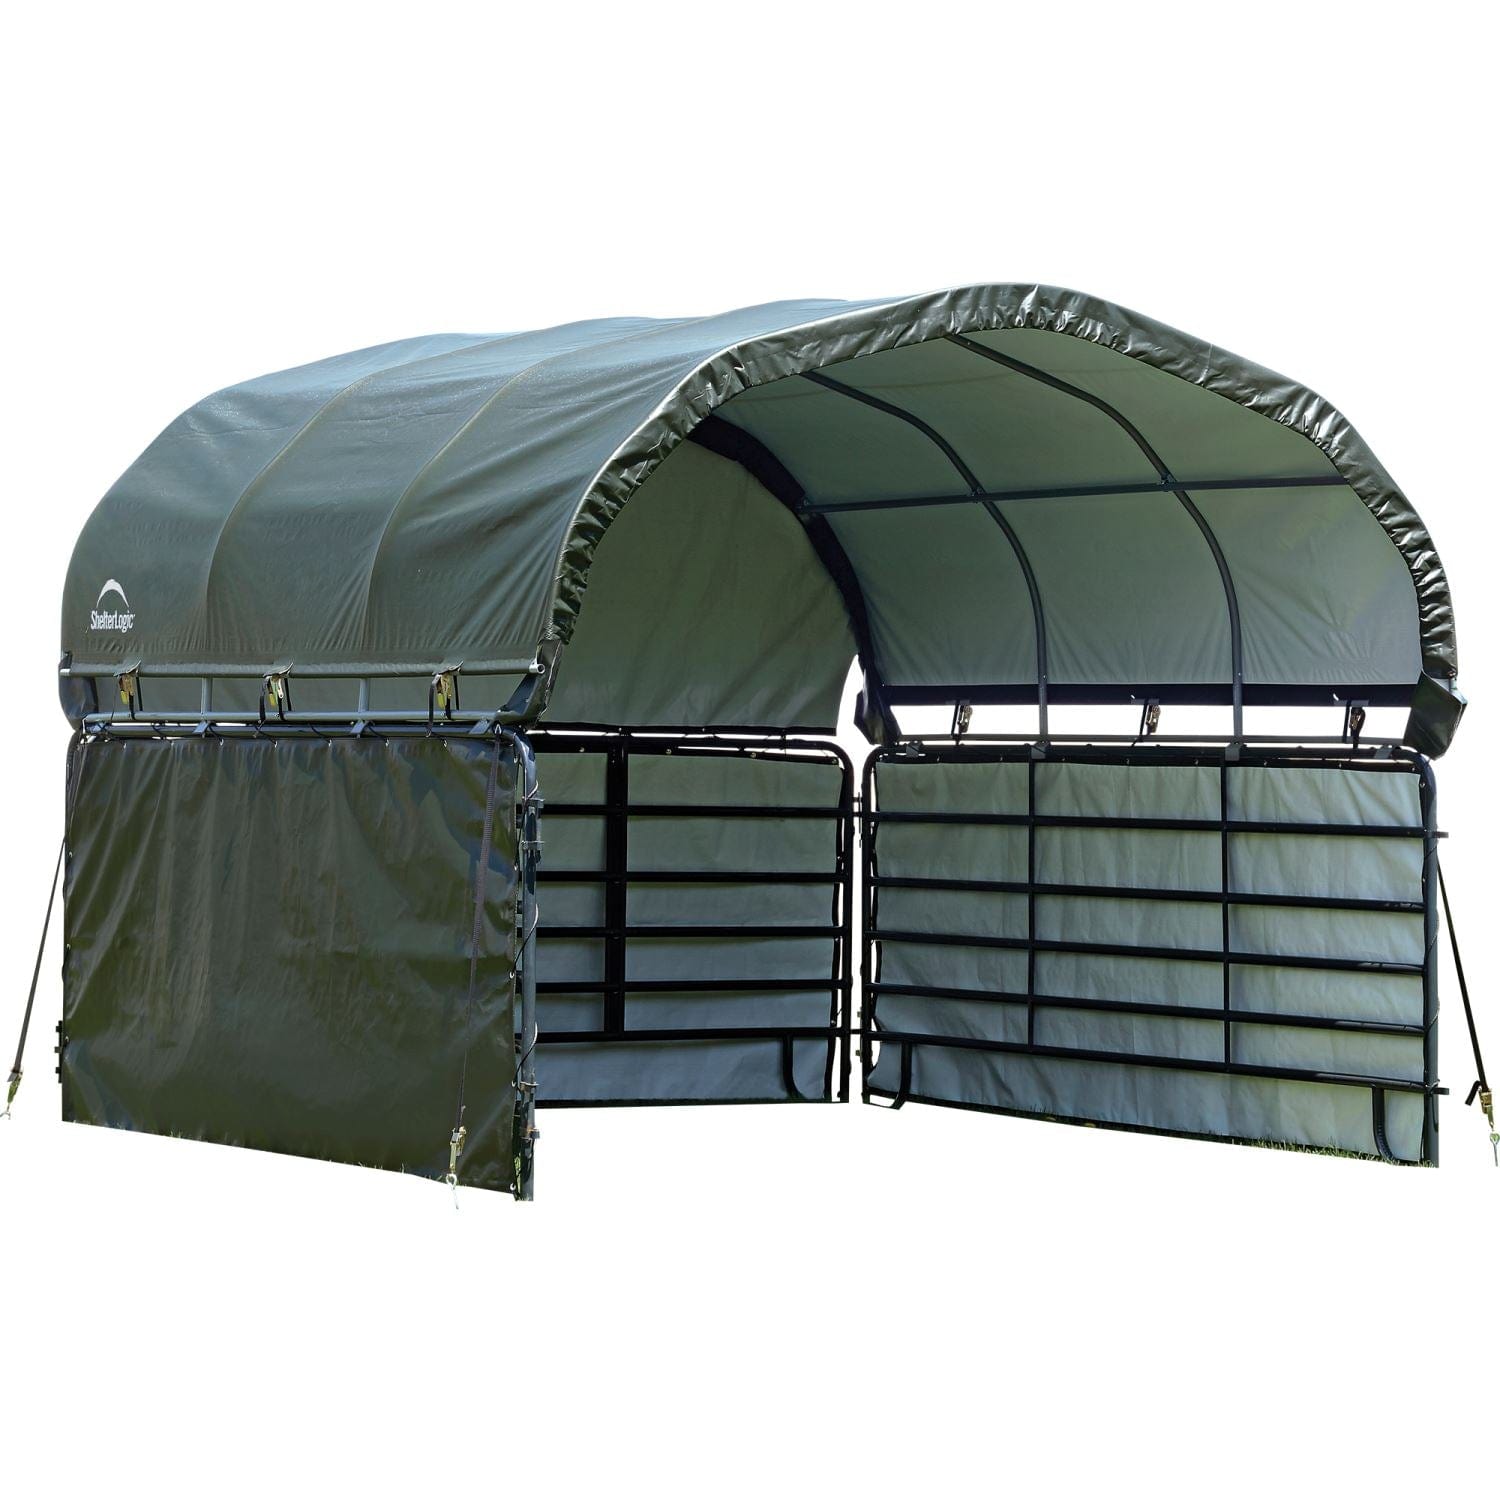 ShelterLogic Enclosure Kit for Corral Shelter Livestock Shade 10' x 10' Green (Corral Shelter & Panels NOT Included) - mygreenhousestore.com